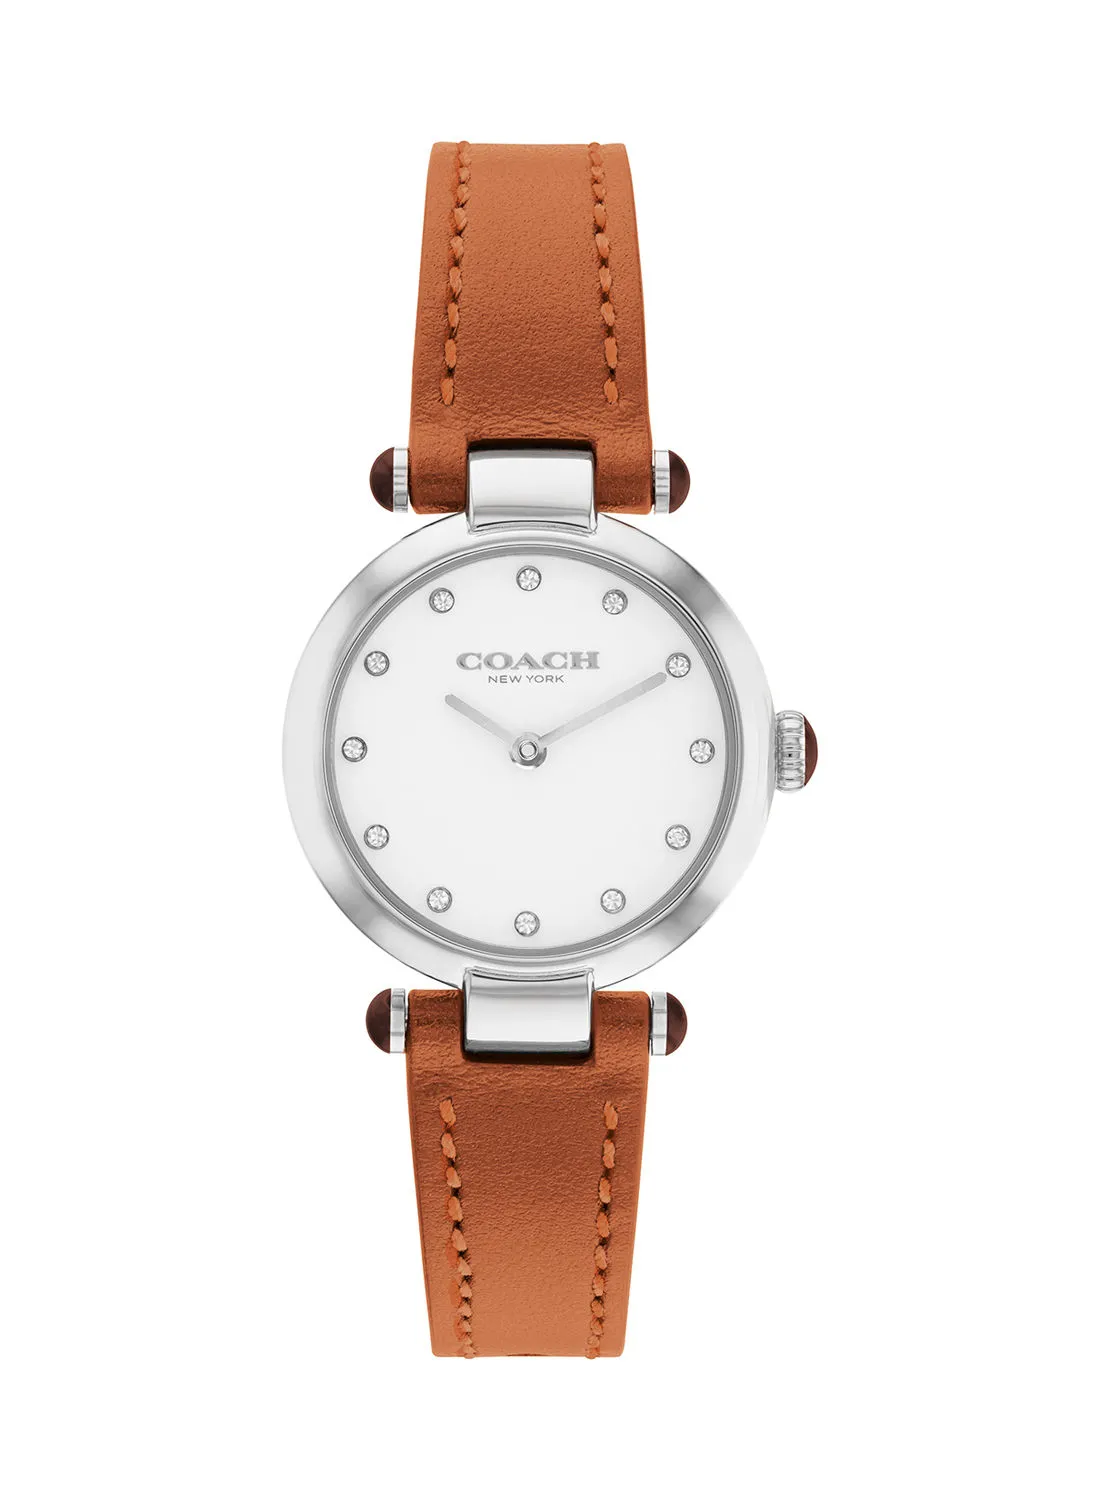 COACH Cary Women's Leather Analog Wrist Watch - 14504016